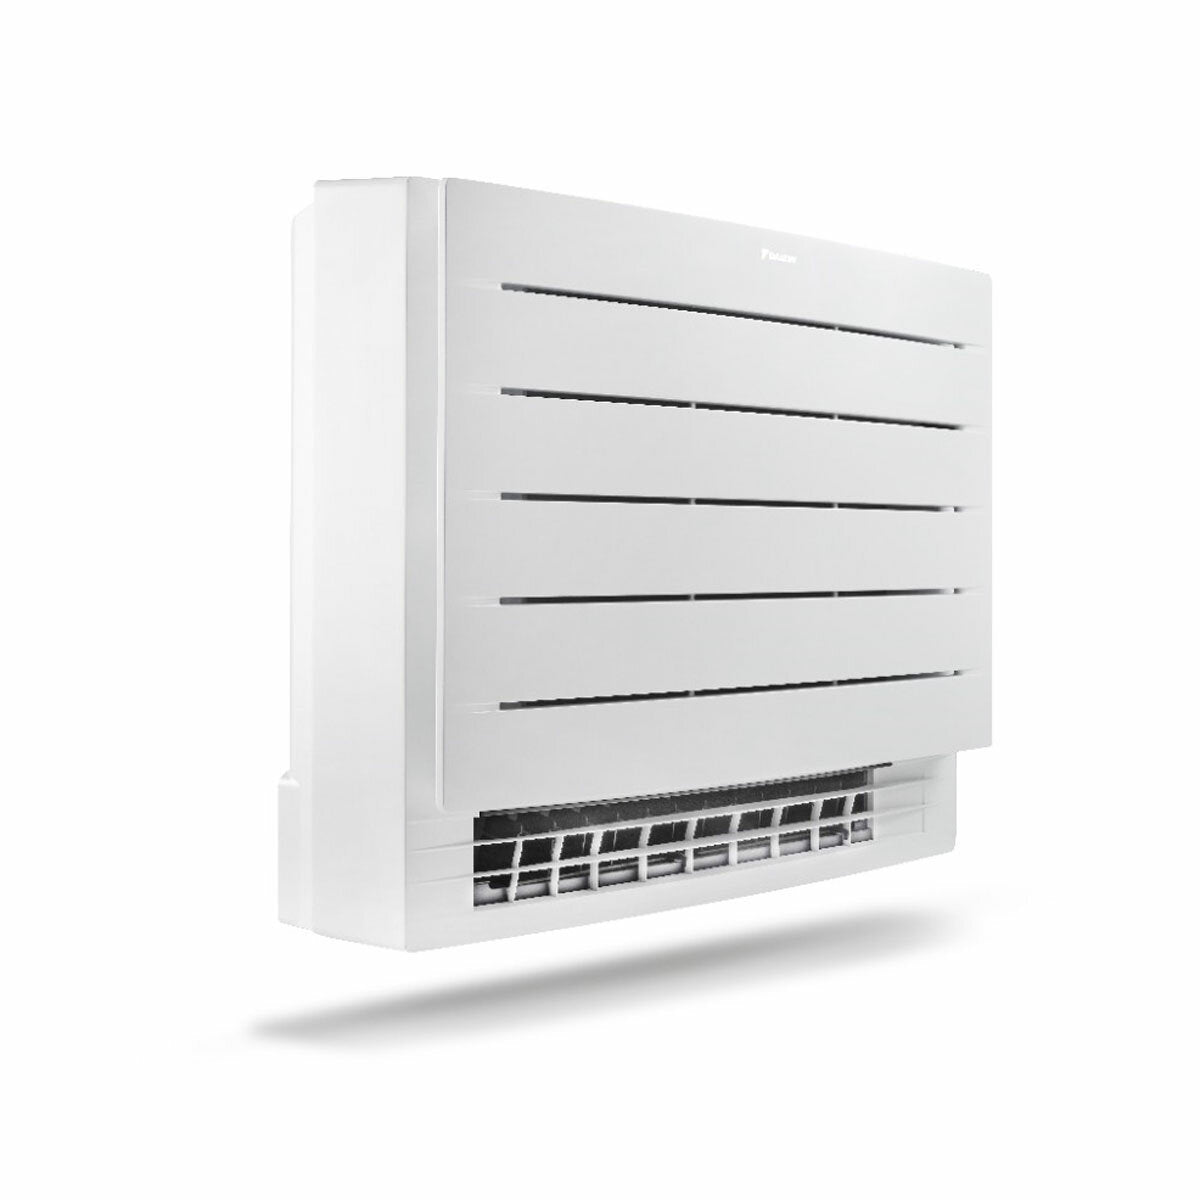 Daikin Perfera Floor air conditioner dual split 9000 + 12000 BTU inverter A +++ wifi outdoor unit 5.0 kW